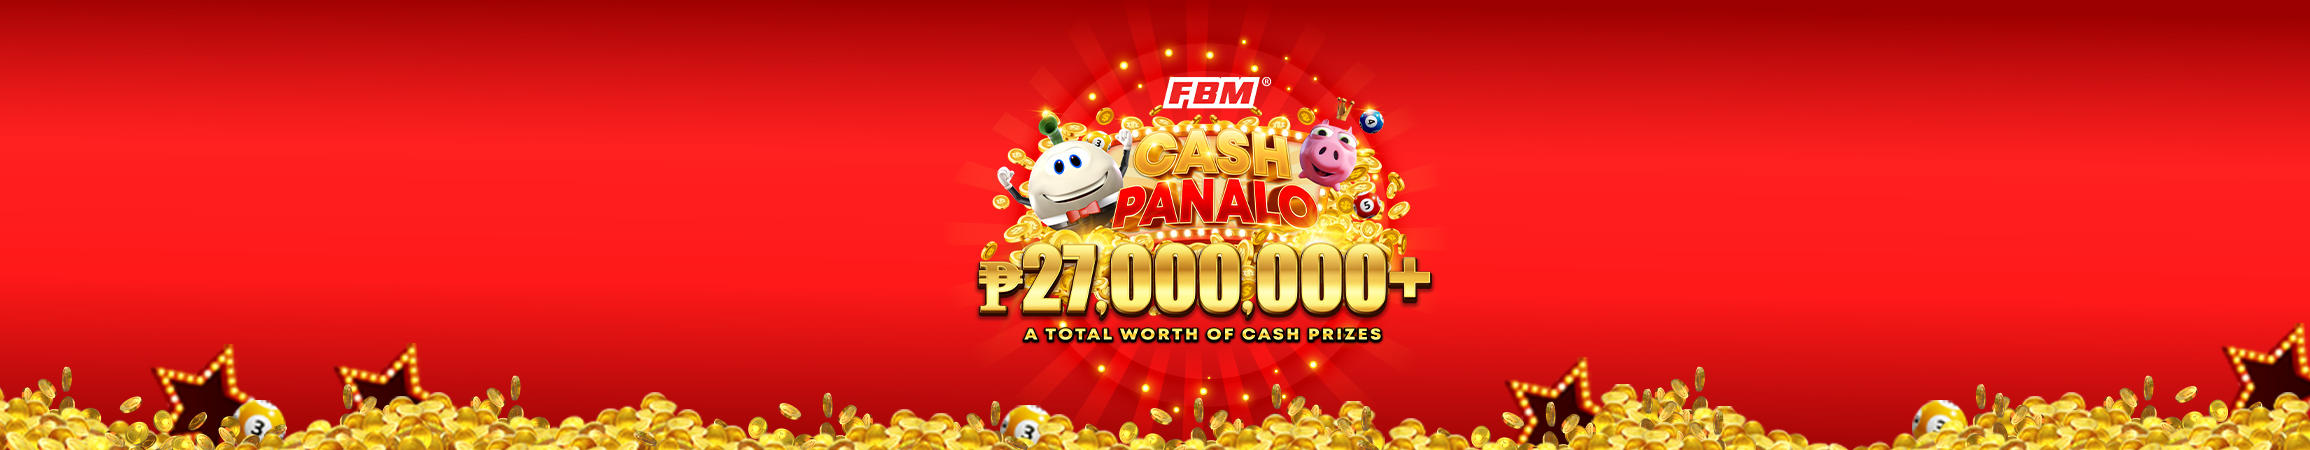 FBM® Cash Panalo is back and brings bigger cash prizes!